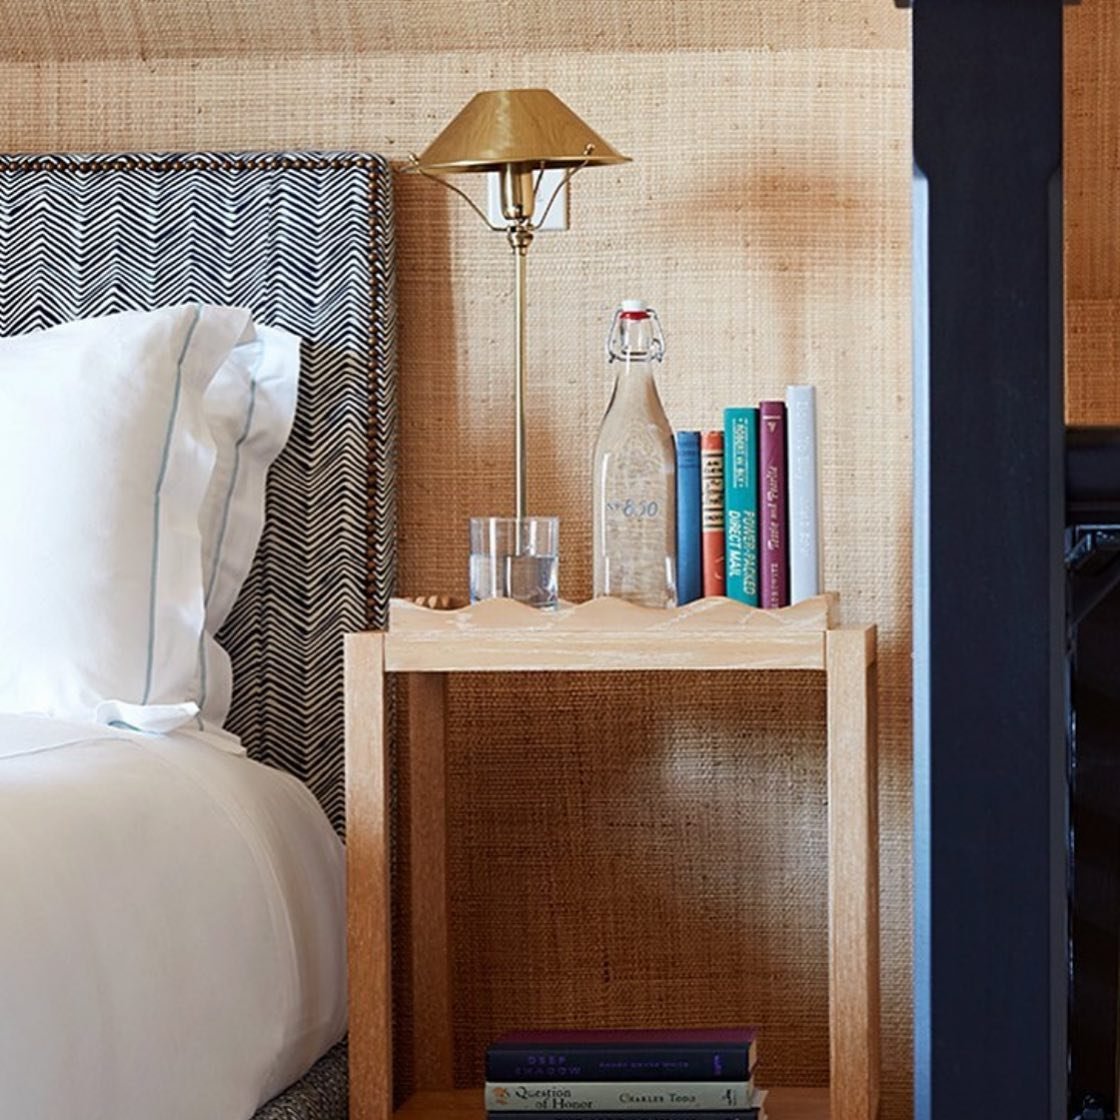 Get cozy in our Petit Duplex. 🌾

.
.
.
.
.
#hotel850svb #weho #losangeles #boutiquehotel #ritakonig